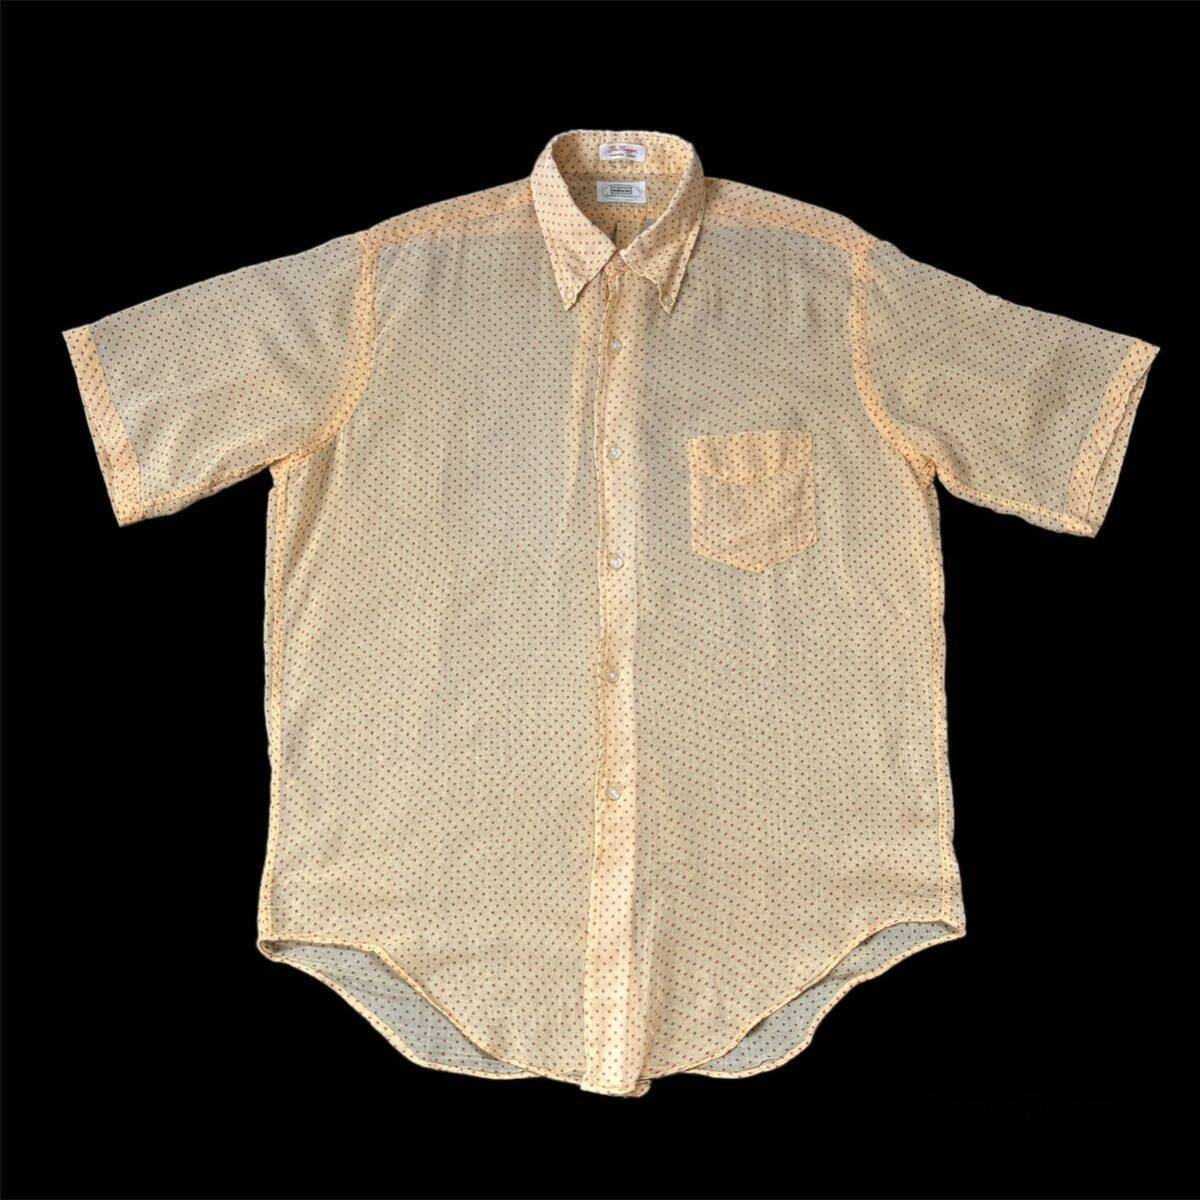 60s Gant Shirtmakers Wallachs Polka Dot Pattern S/S B.D Shirt 60年代 ガント 水玉柄 半袖 ボタンダウンシャツ vintage ヴィンテージ_画像1